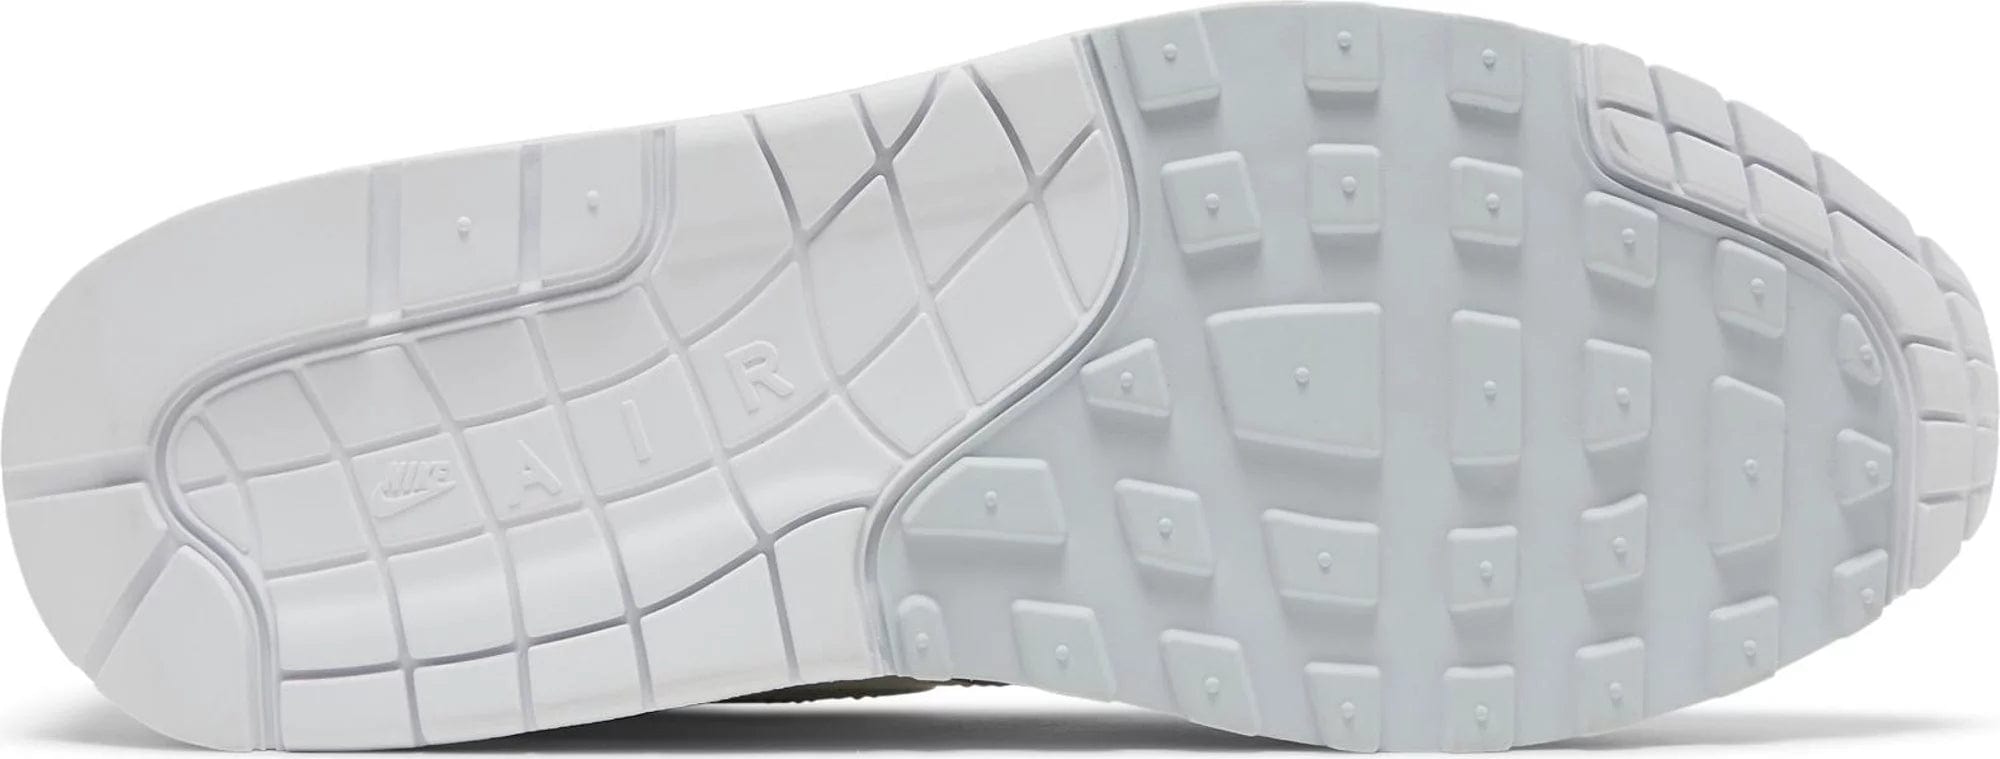 sneakers Nike Air Max 1 Patta Waves White Men's